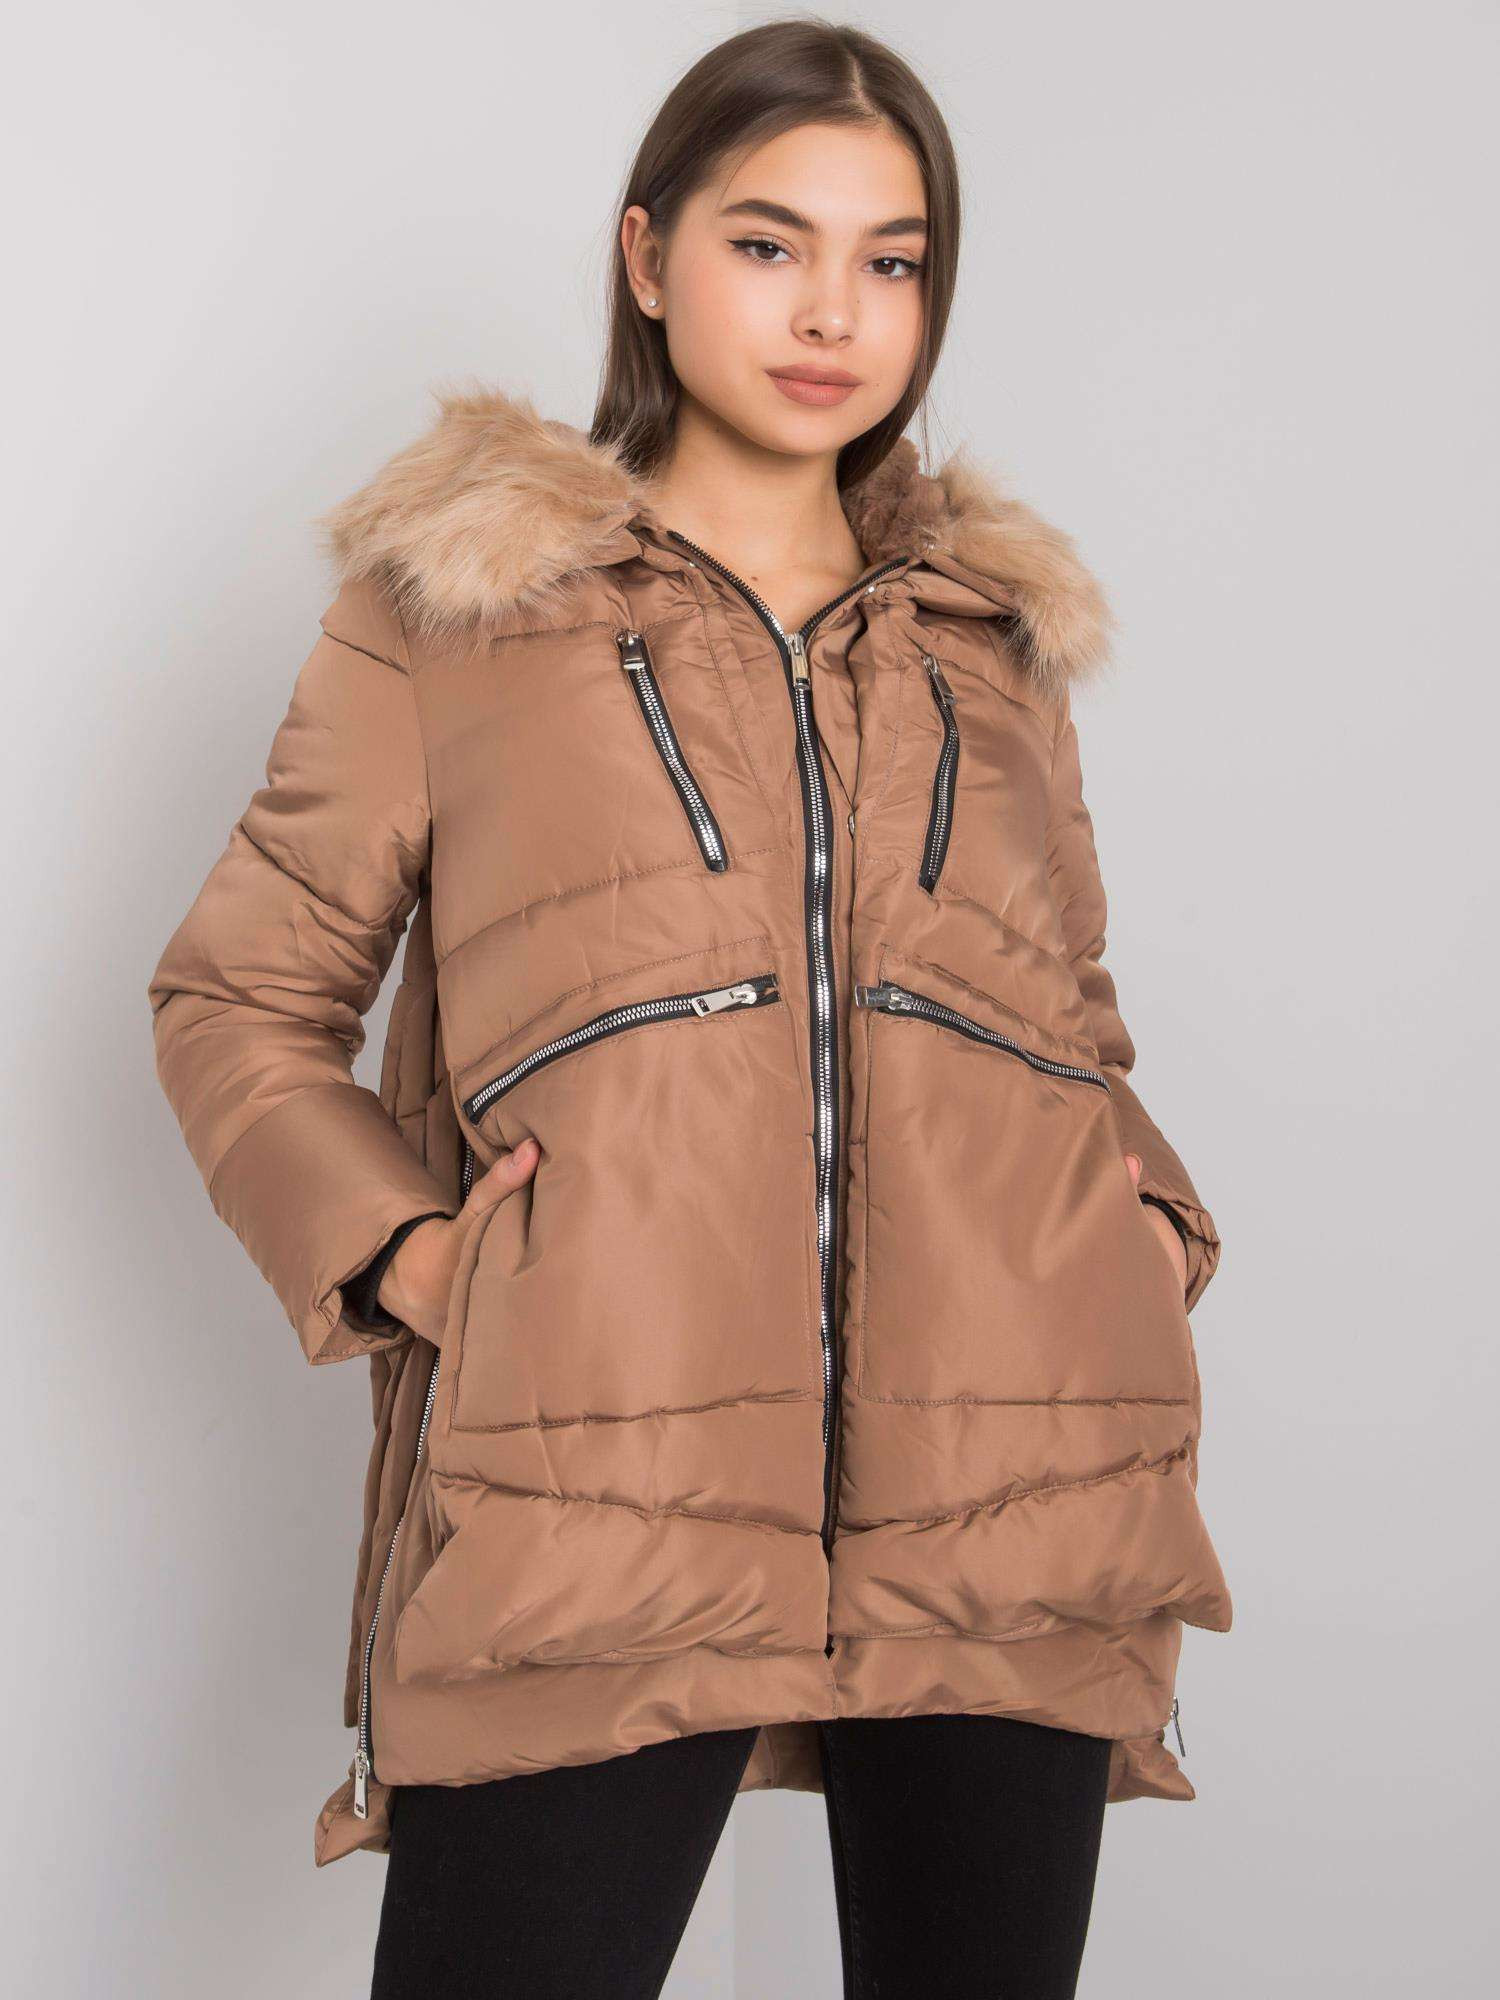 Dámský kabát NM KR H 1072 velbloudí XL